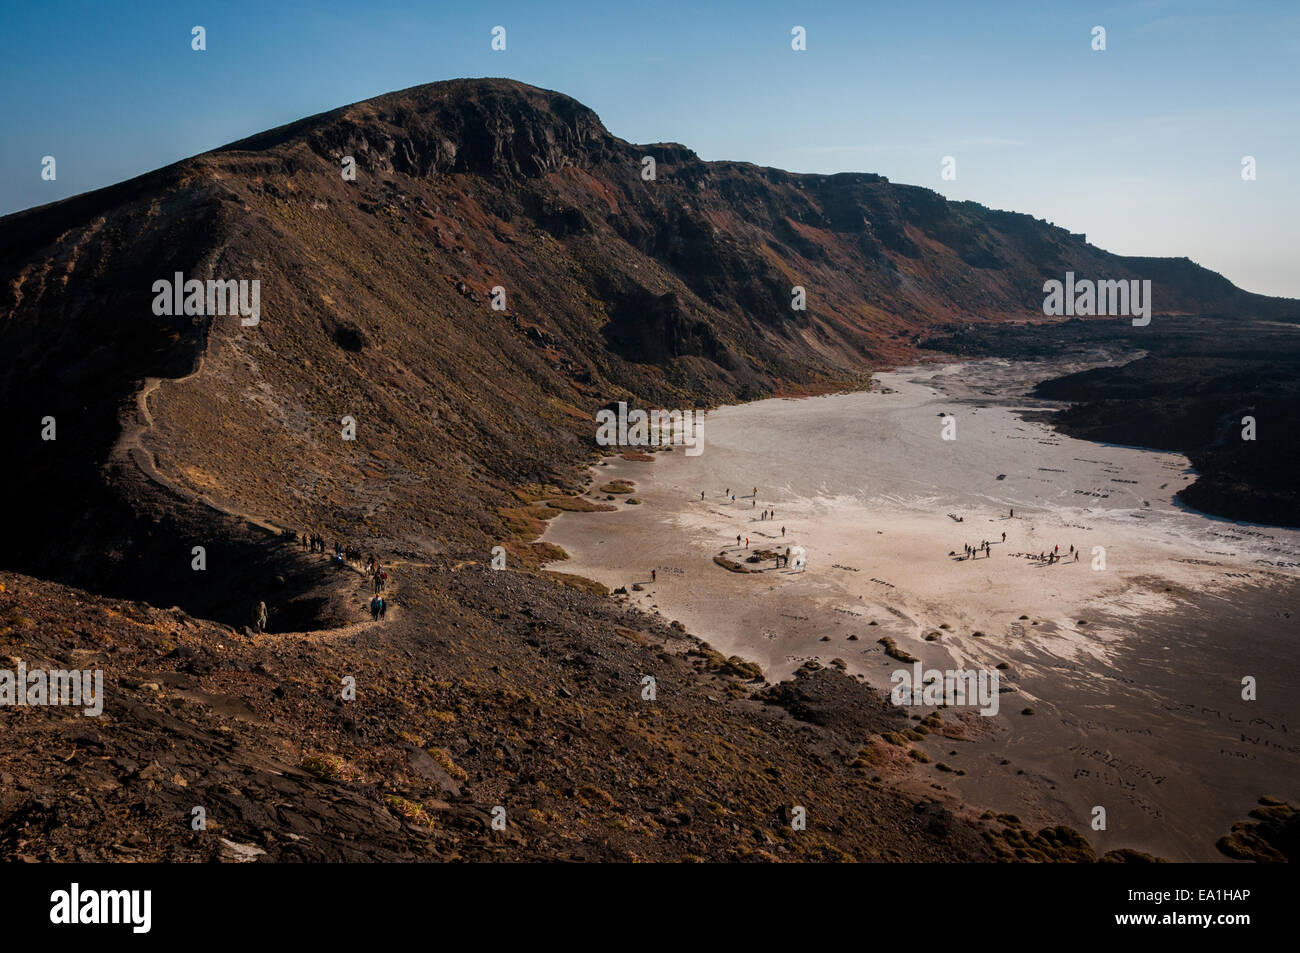 Die alte Caldera des Vulkans Mount Lewotolok auf der Insel Lembata, Lembata, East Nusa Tenggara, Indonesien. Stockfoto